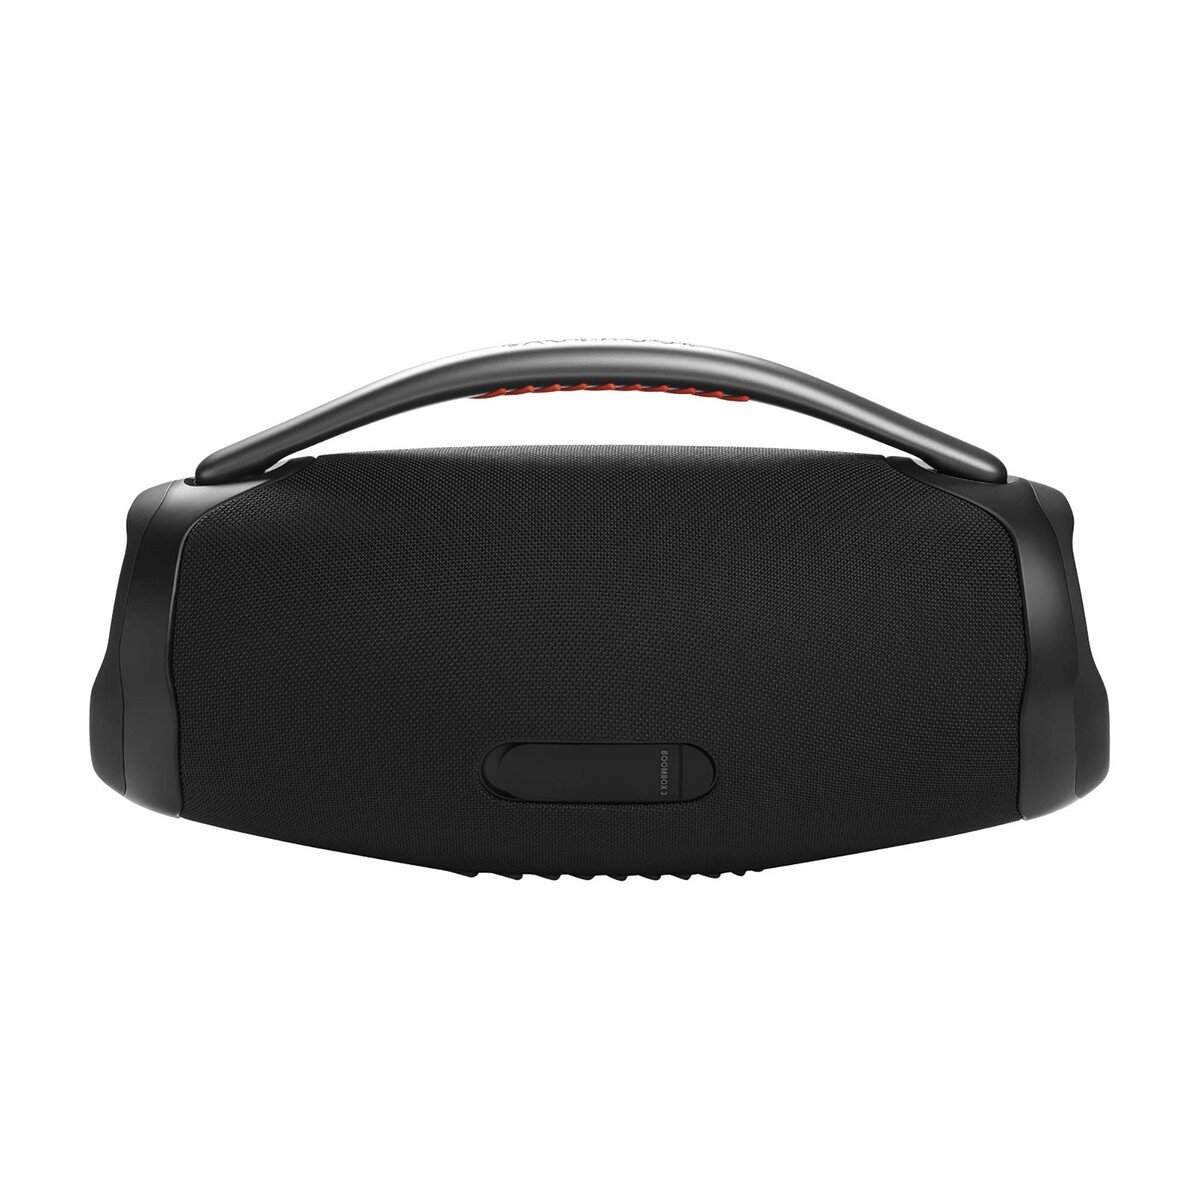 JBL BOOMBOX-3 Portable speaker Black